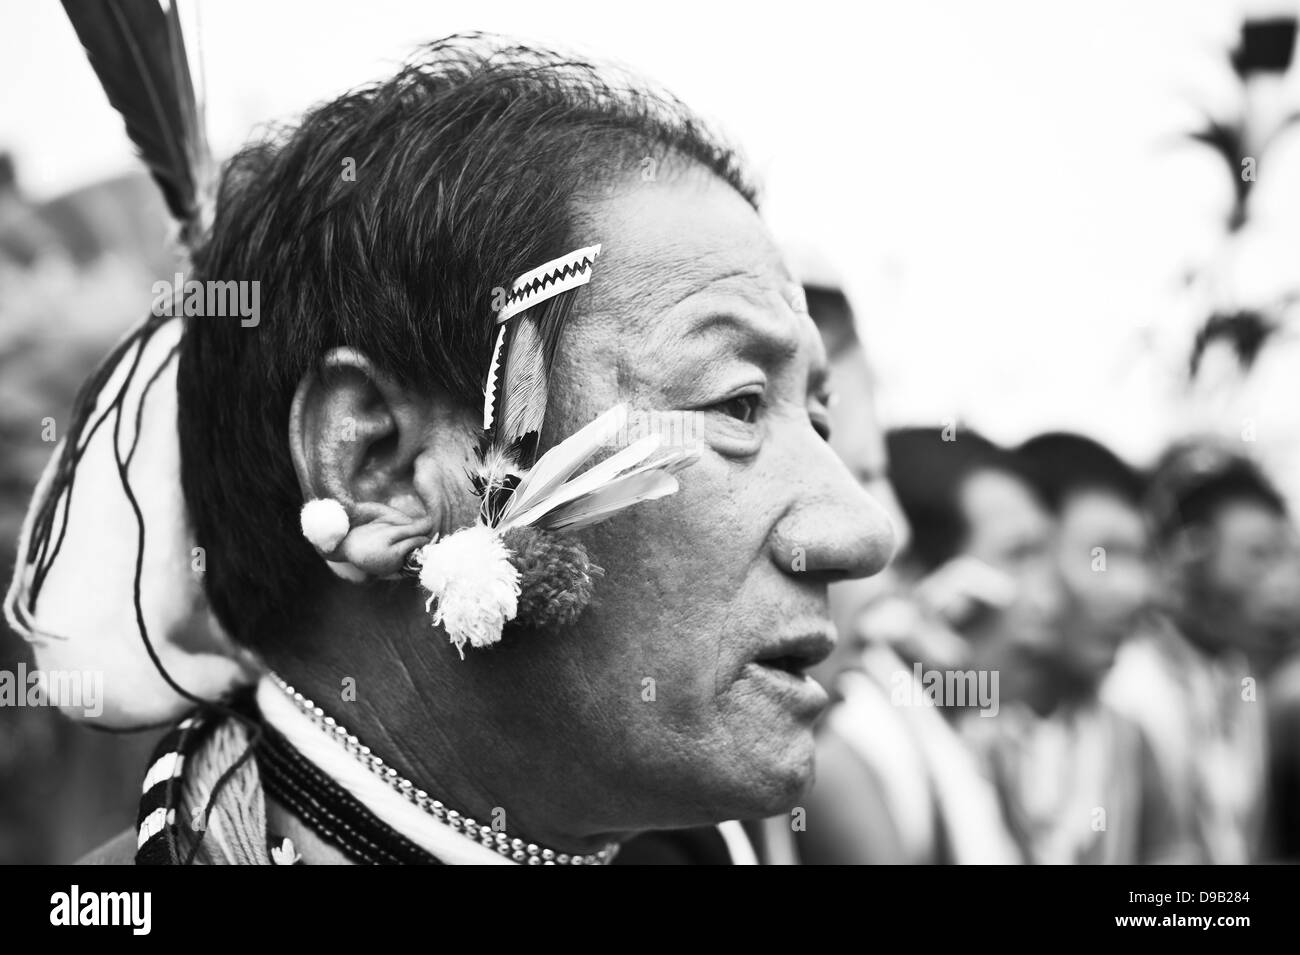 Naga tribesman in traditional outfit, Hornbill Festival, Kohima, Nagaland, India Stock Photo